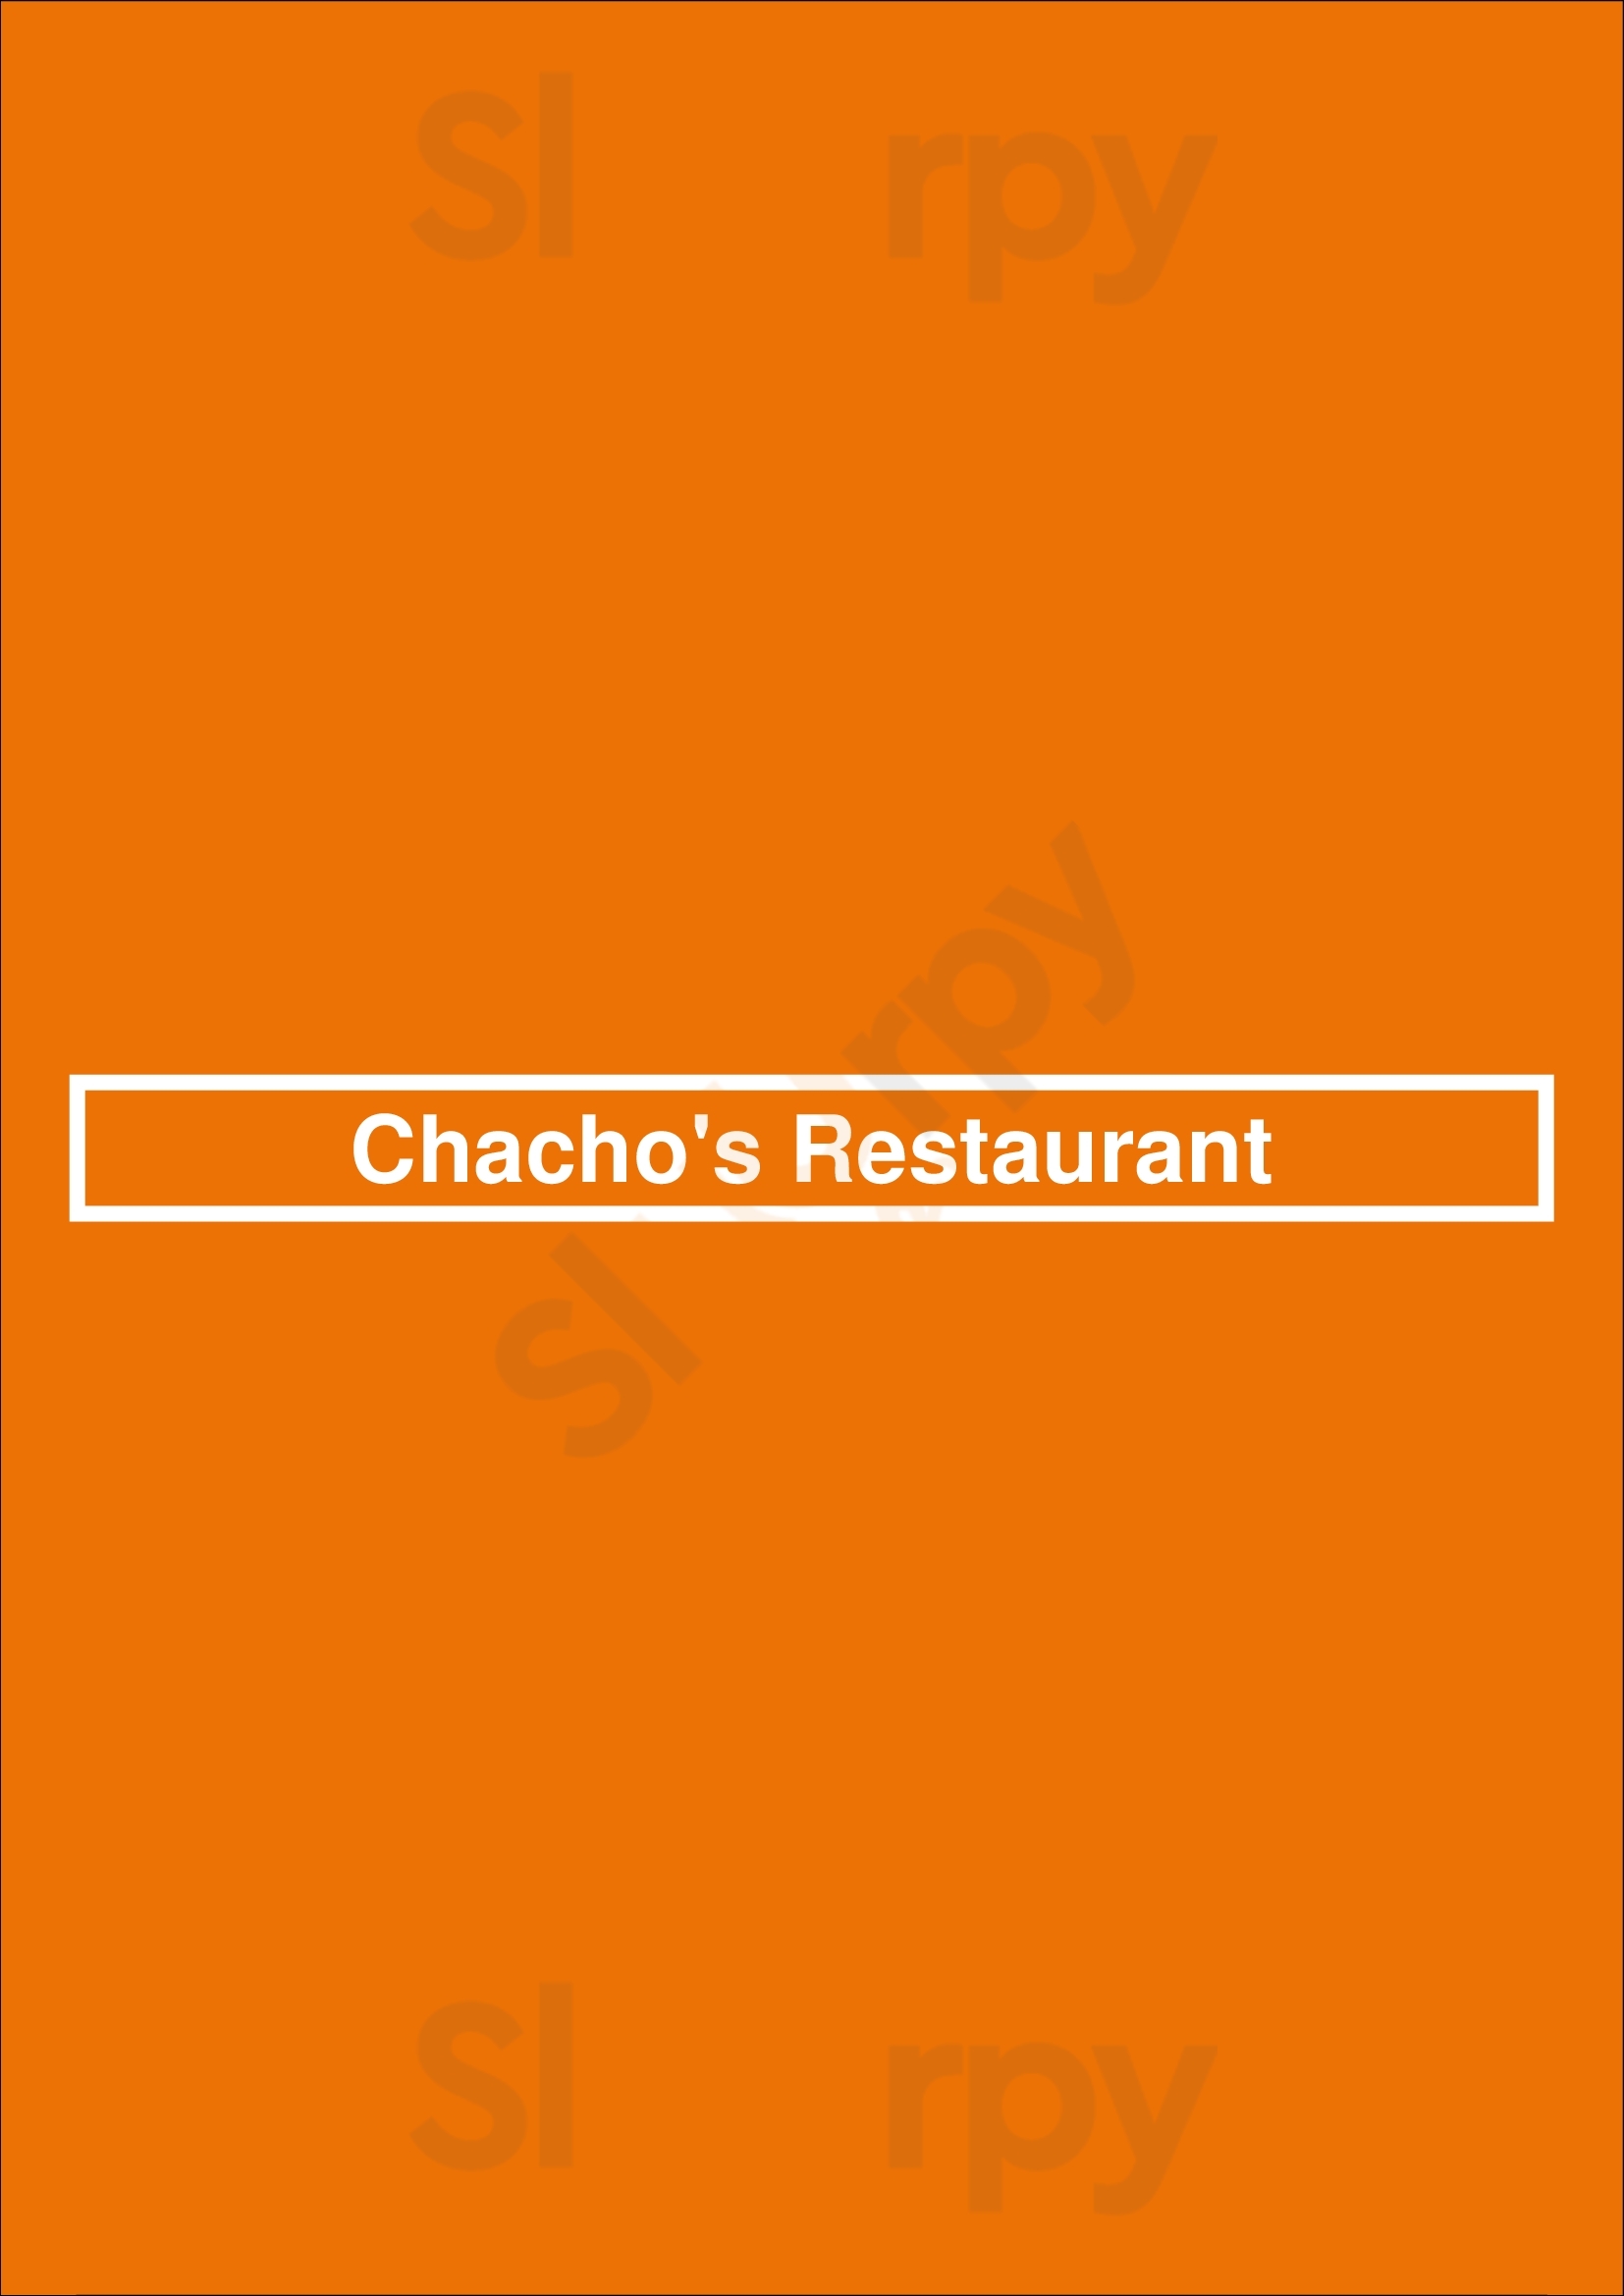 Chacho's Restaurant Toronto Menu - 1